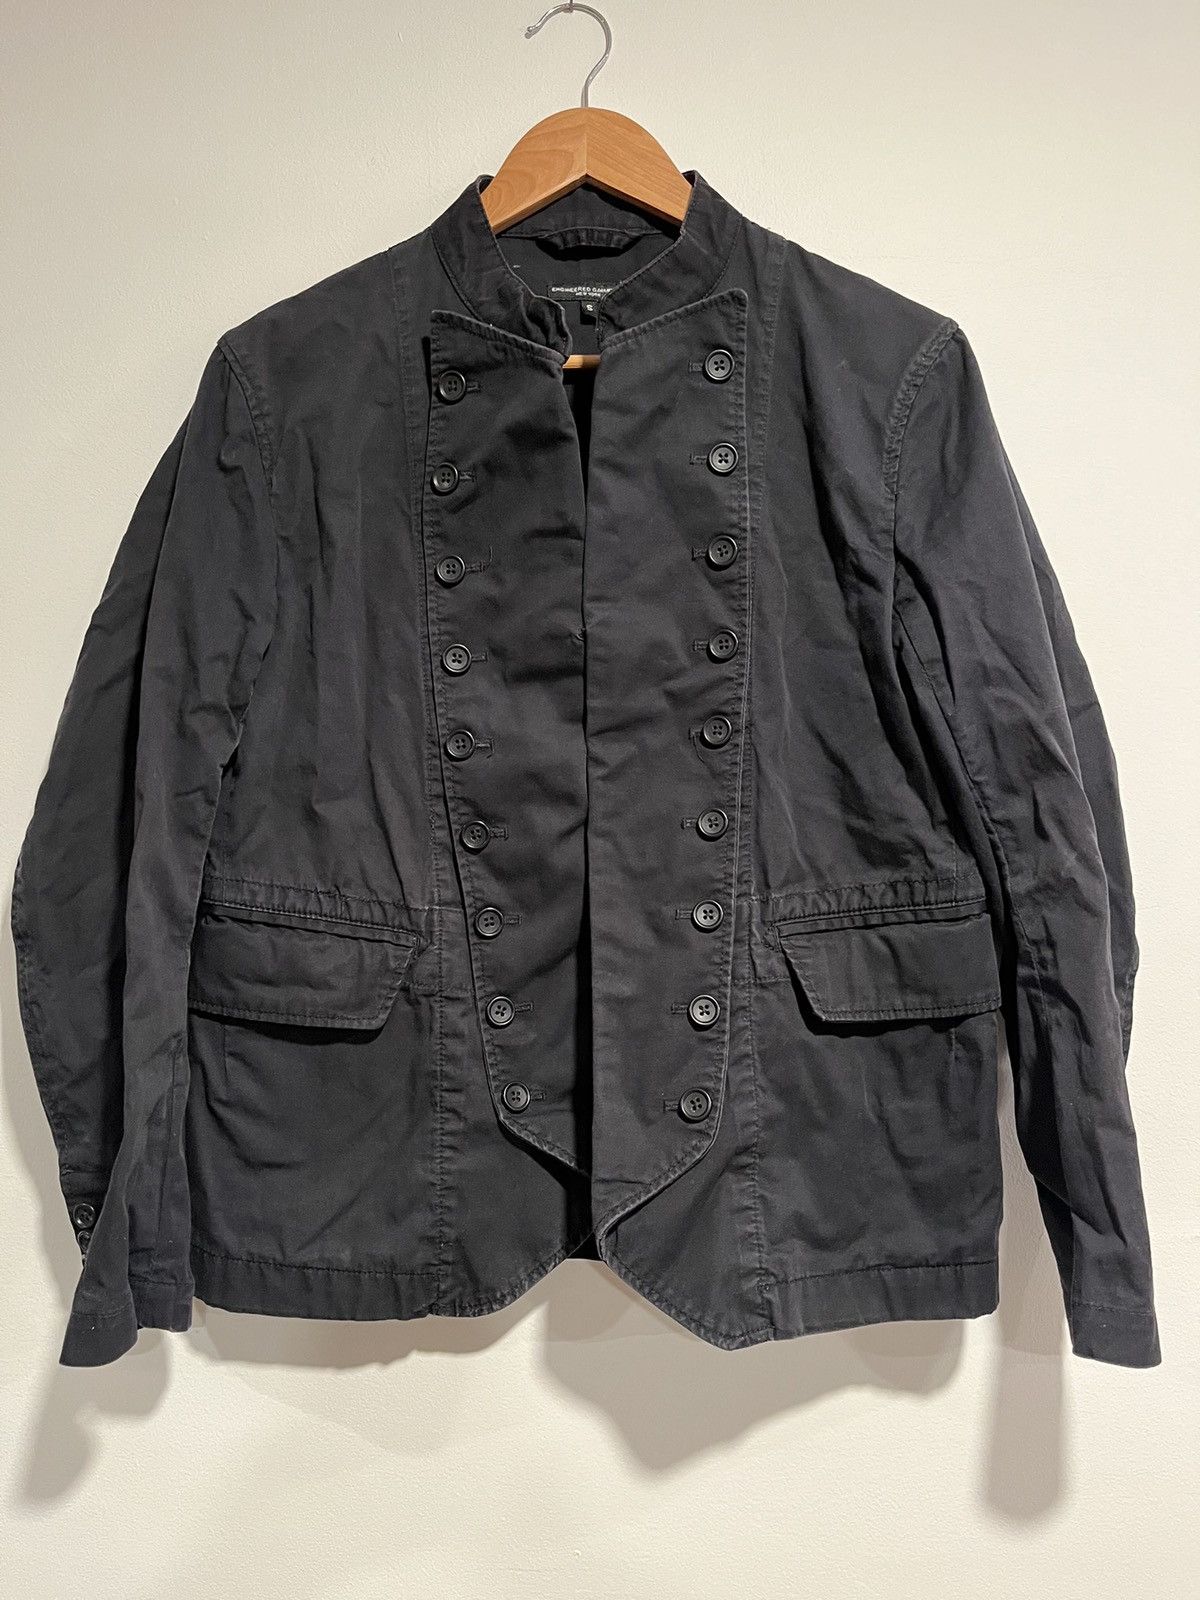 Engineered Garments Engineered Garment Chelsea jacket | Grailed